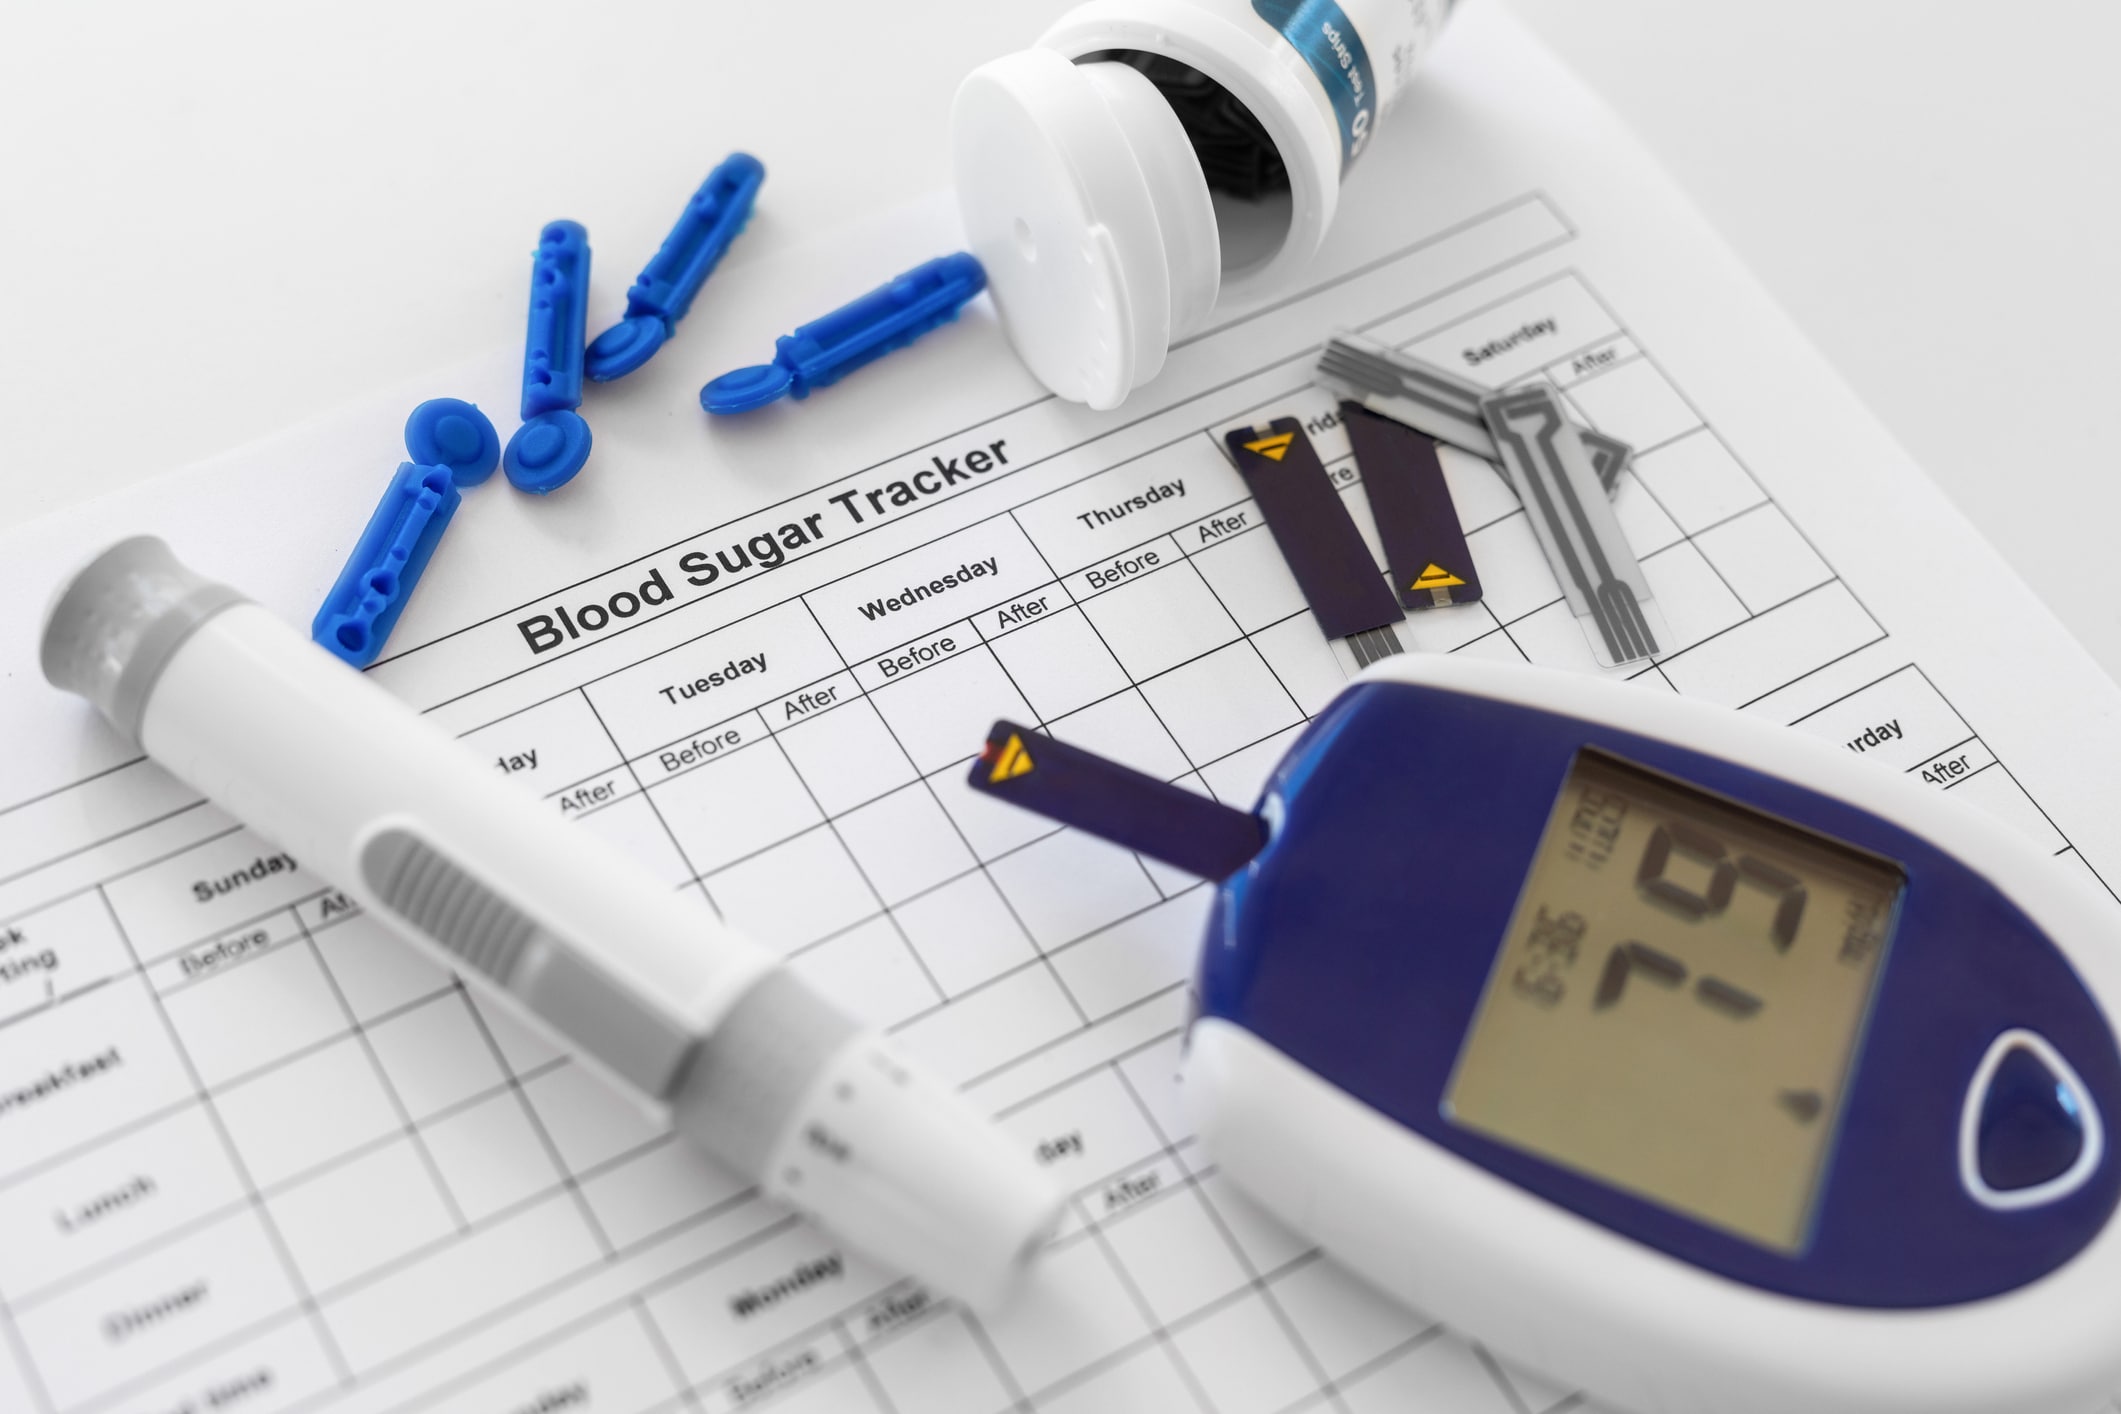 Crediti iStock - kit misuratore diabete